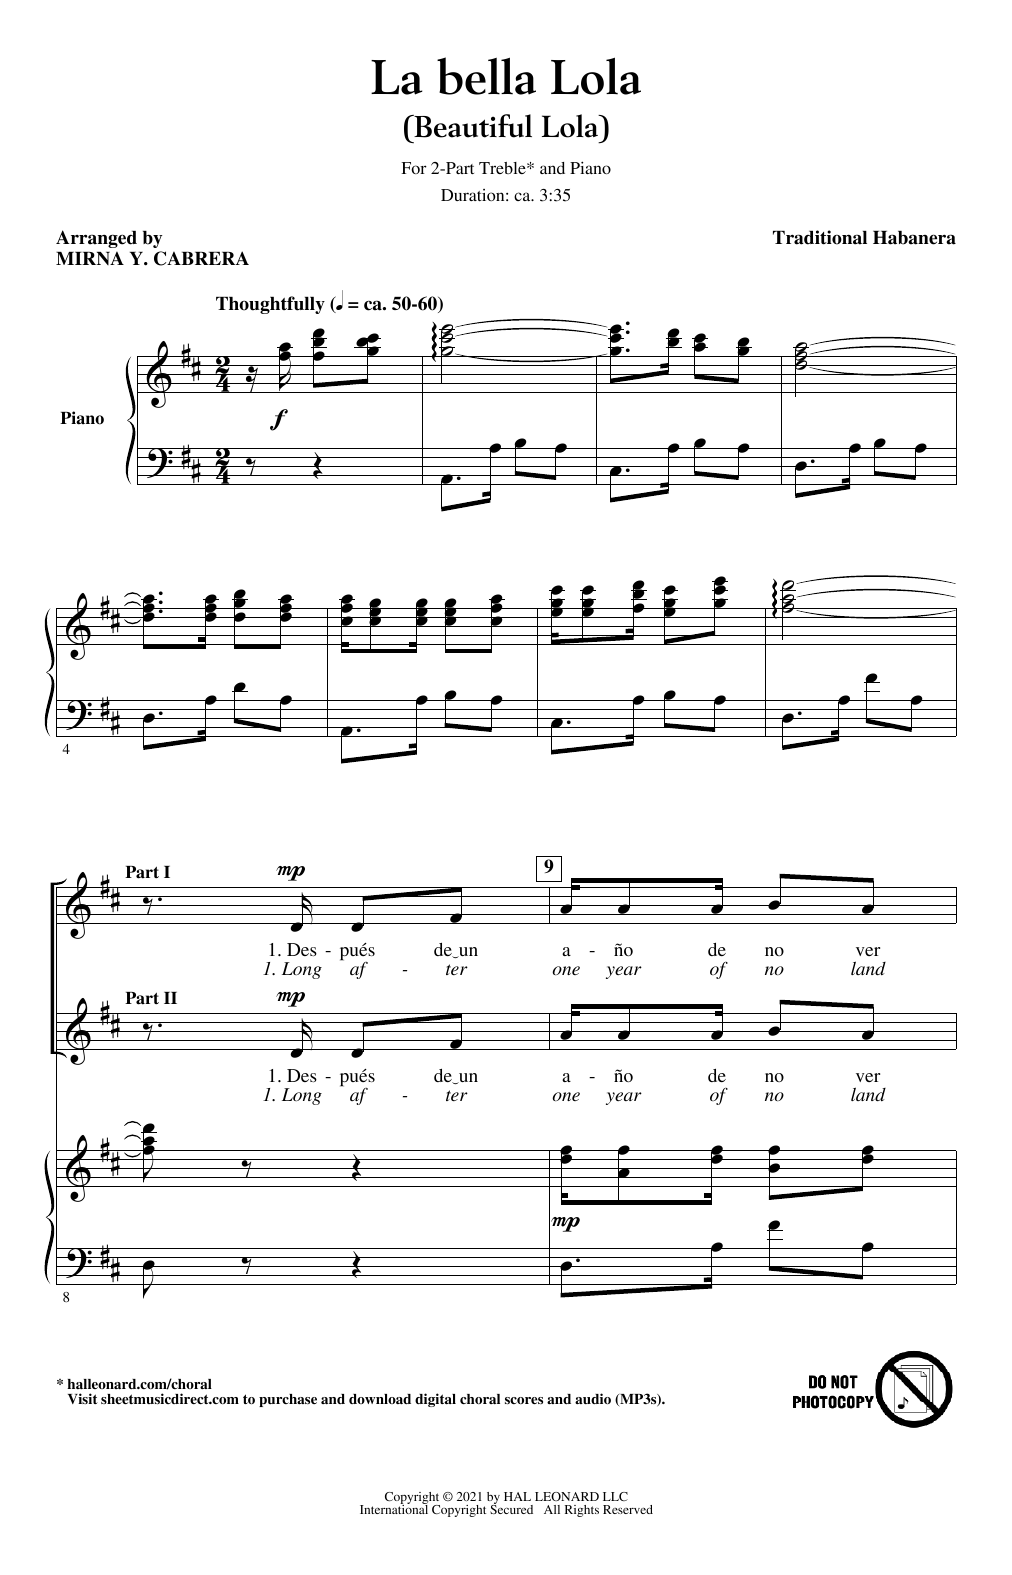 Traditional Habanera La Bella Lola (Beautiful Lola) (arr. Mirna Y. Cabrera) sheet music notes and chords arranged for 2-Part Choir